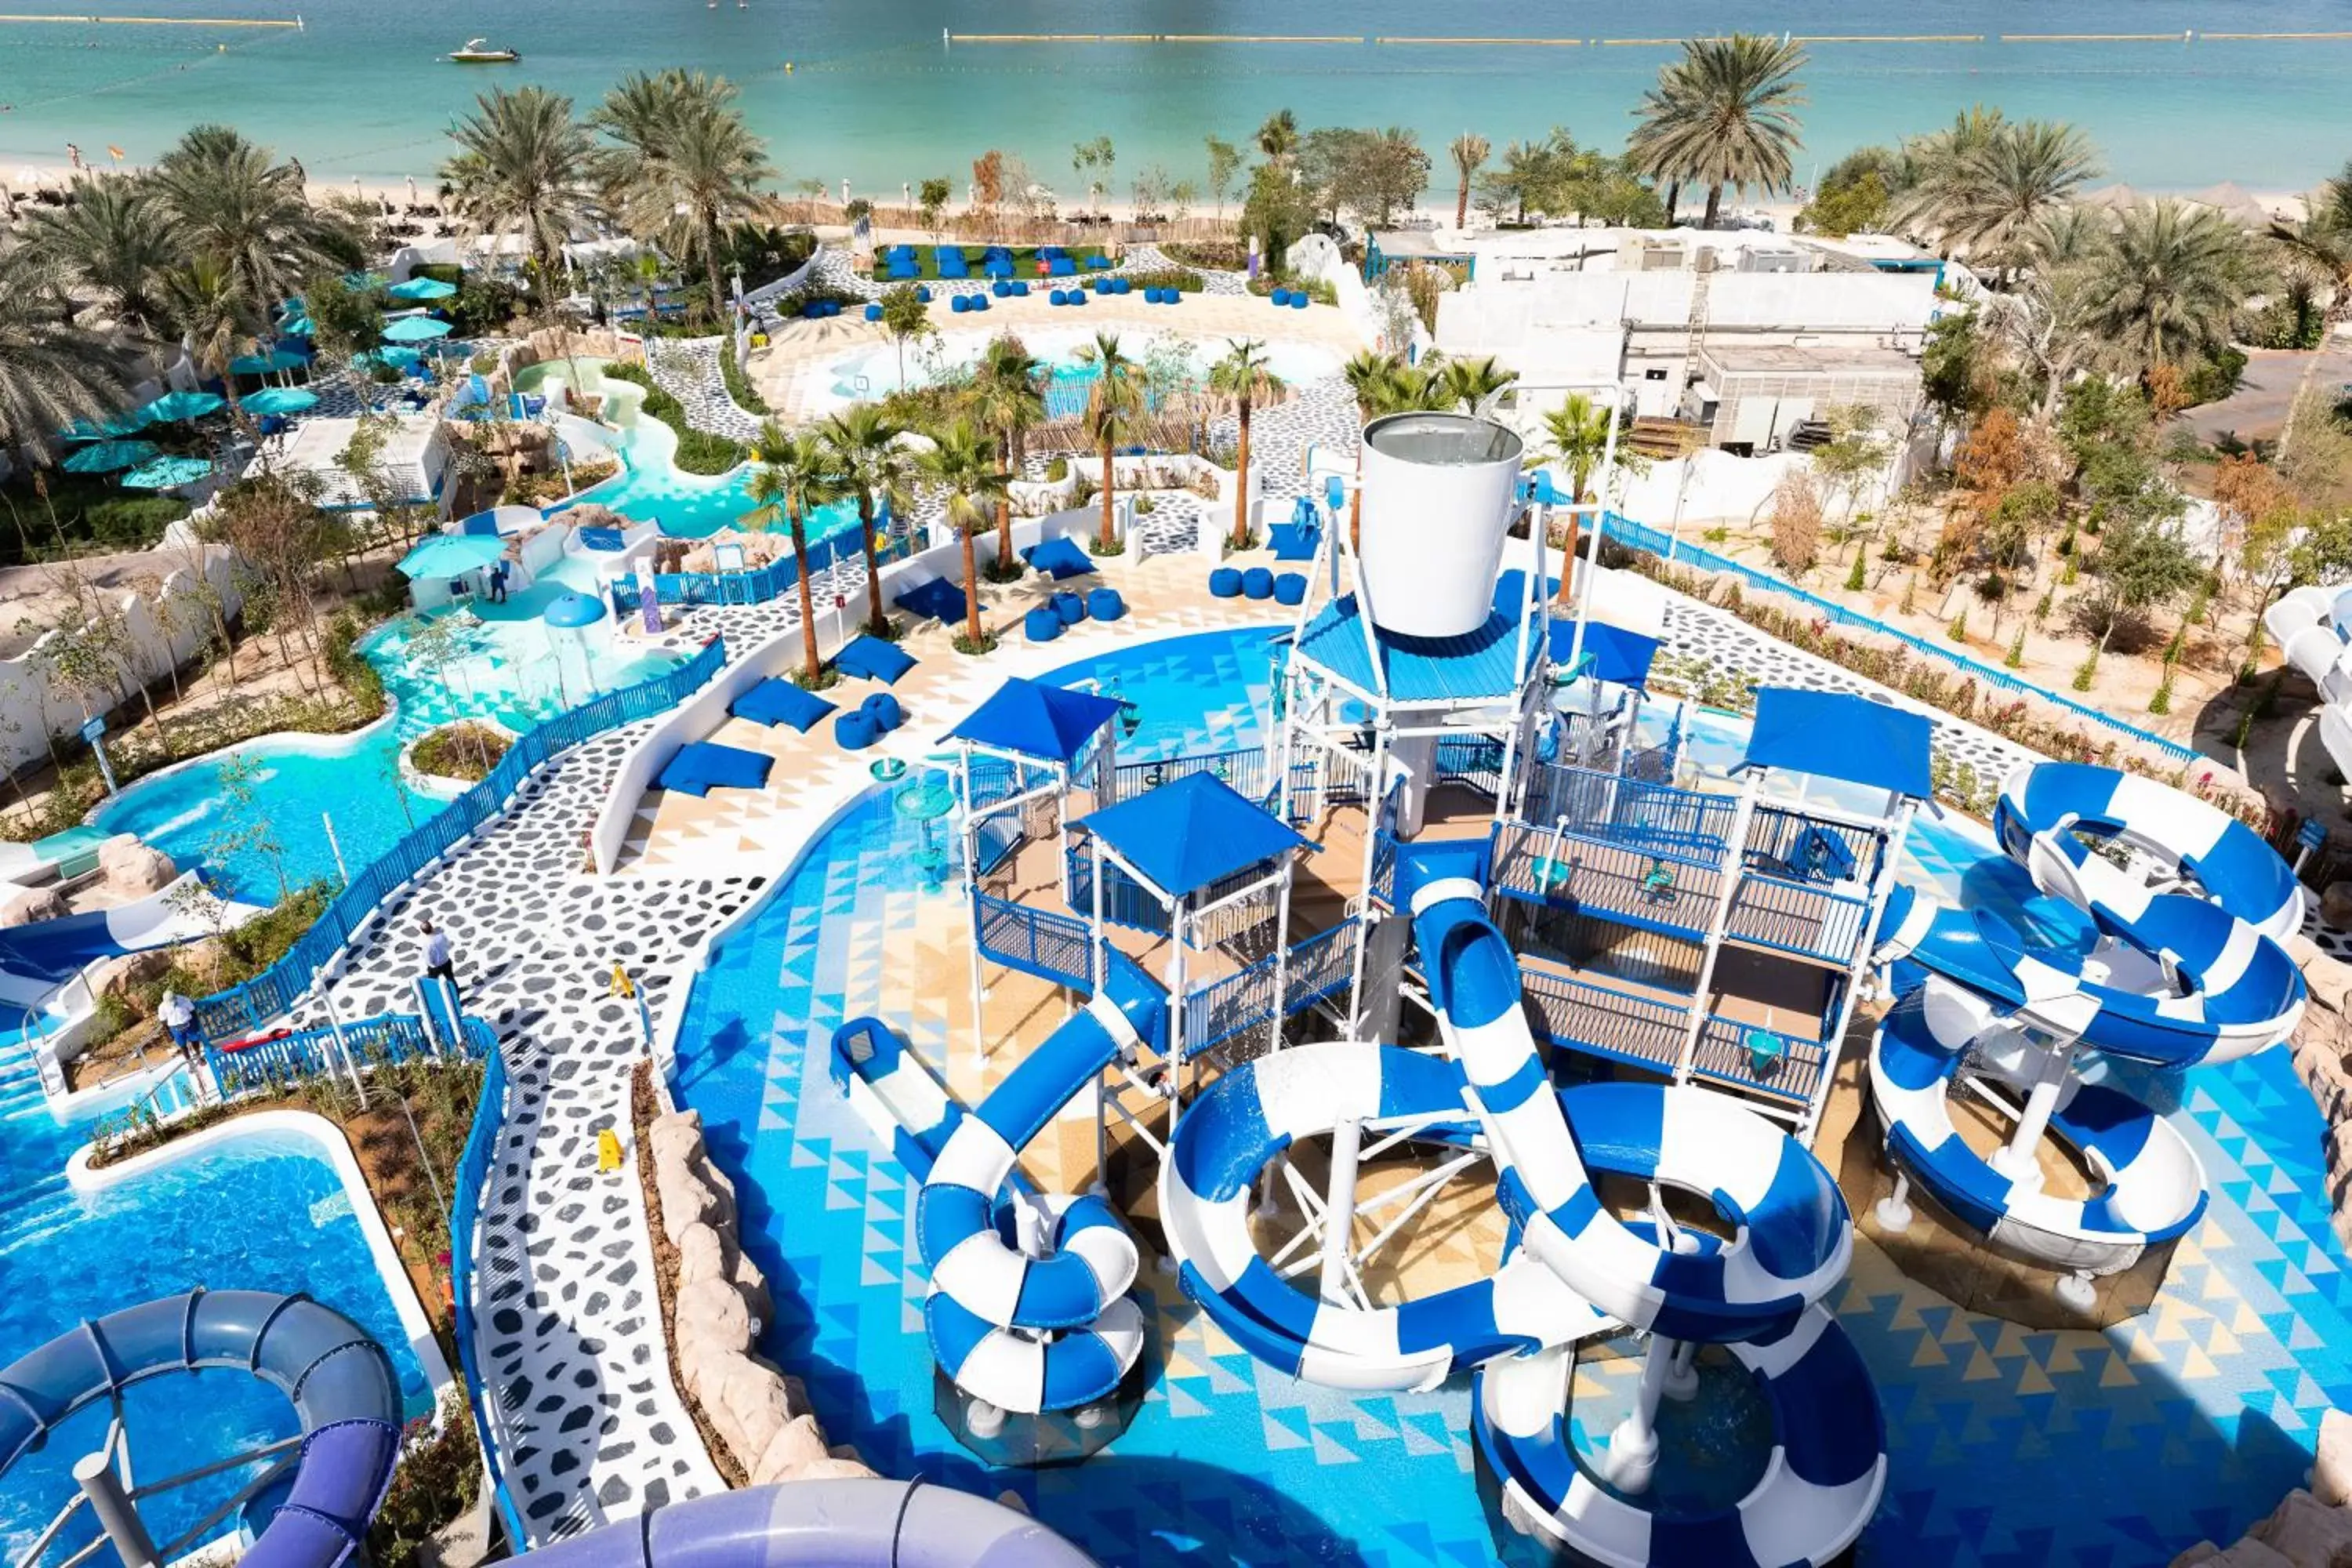 Aqua park, Pool View in The Westin Dubai Mina Seyahi Beach Resort and Waterpark